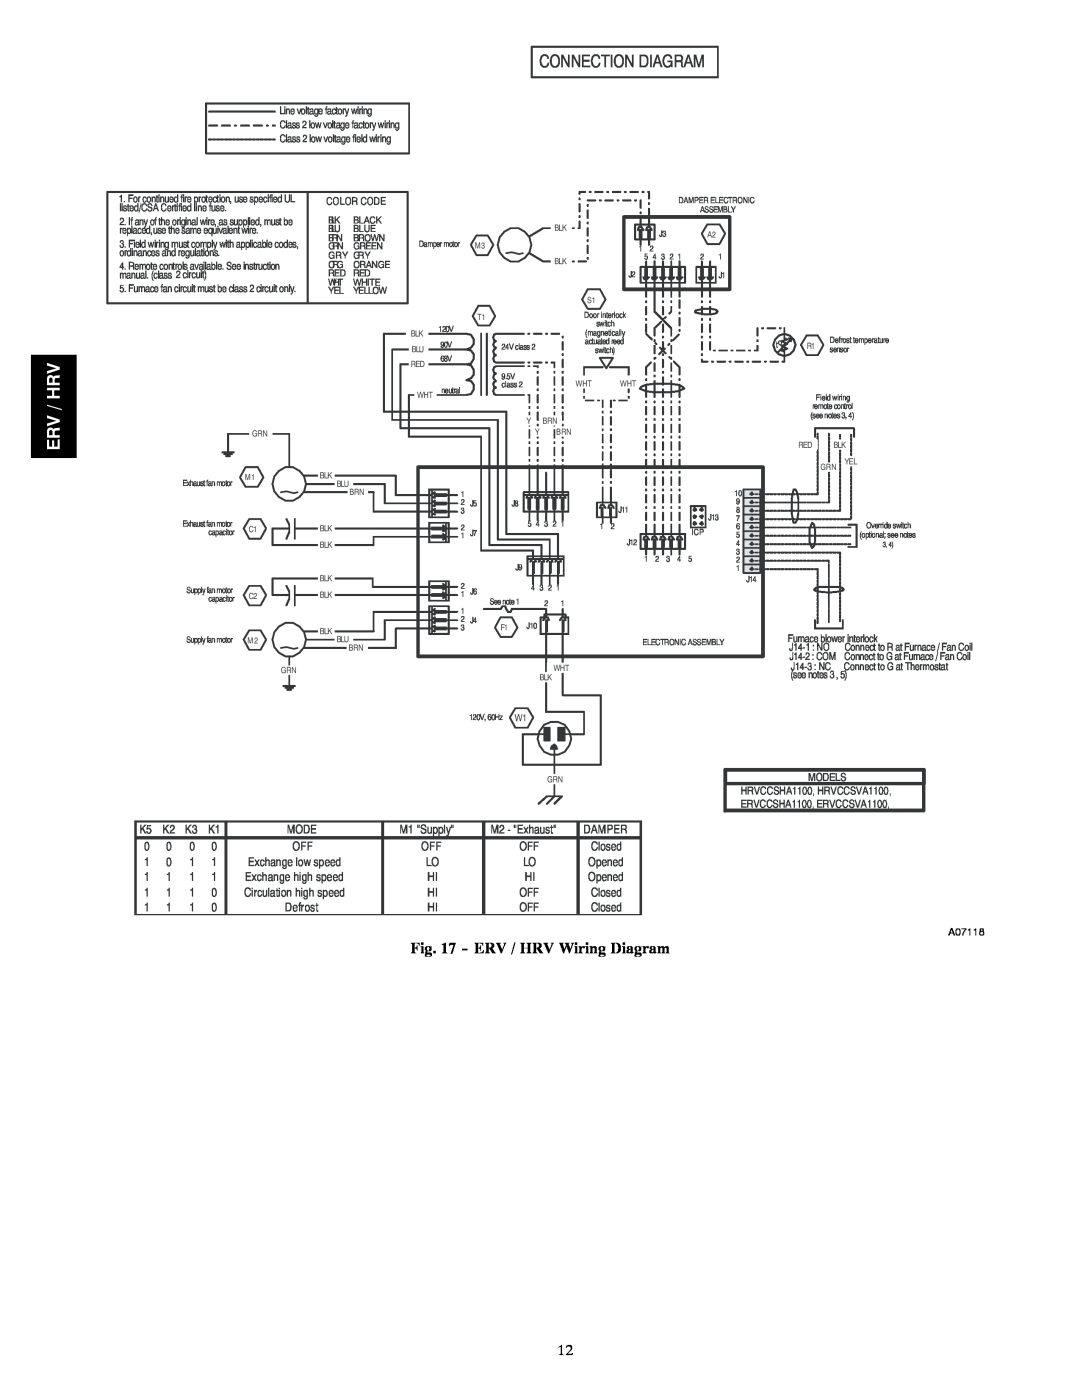 Bryant ERVBBSVA1100 ERV / HRV Wiring Diagram, Erv / Hrv, Connection Diagram, Mode, M1 Supply, M2 - Exhaust, Damper 